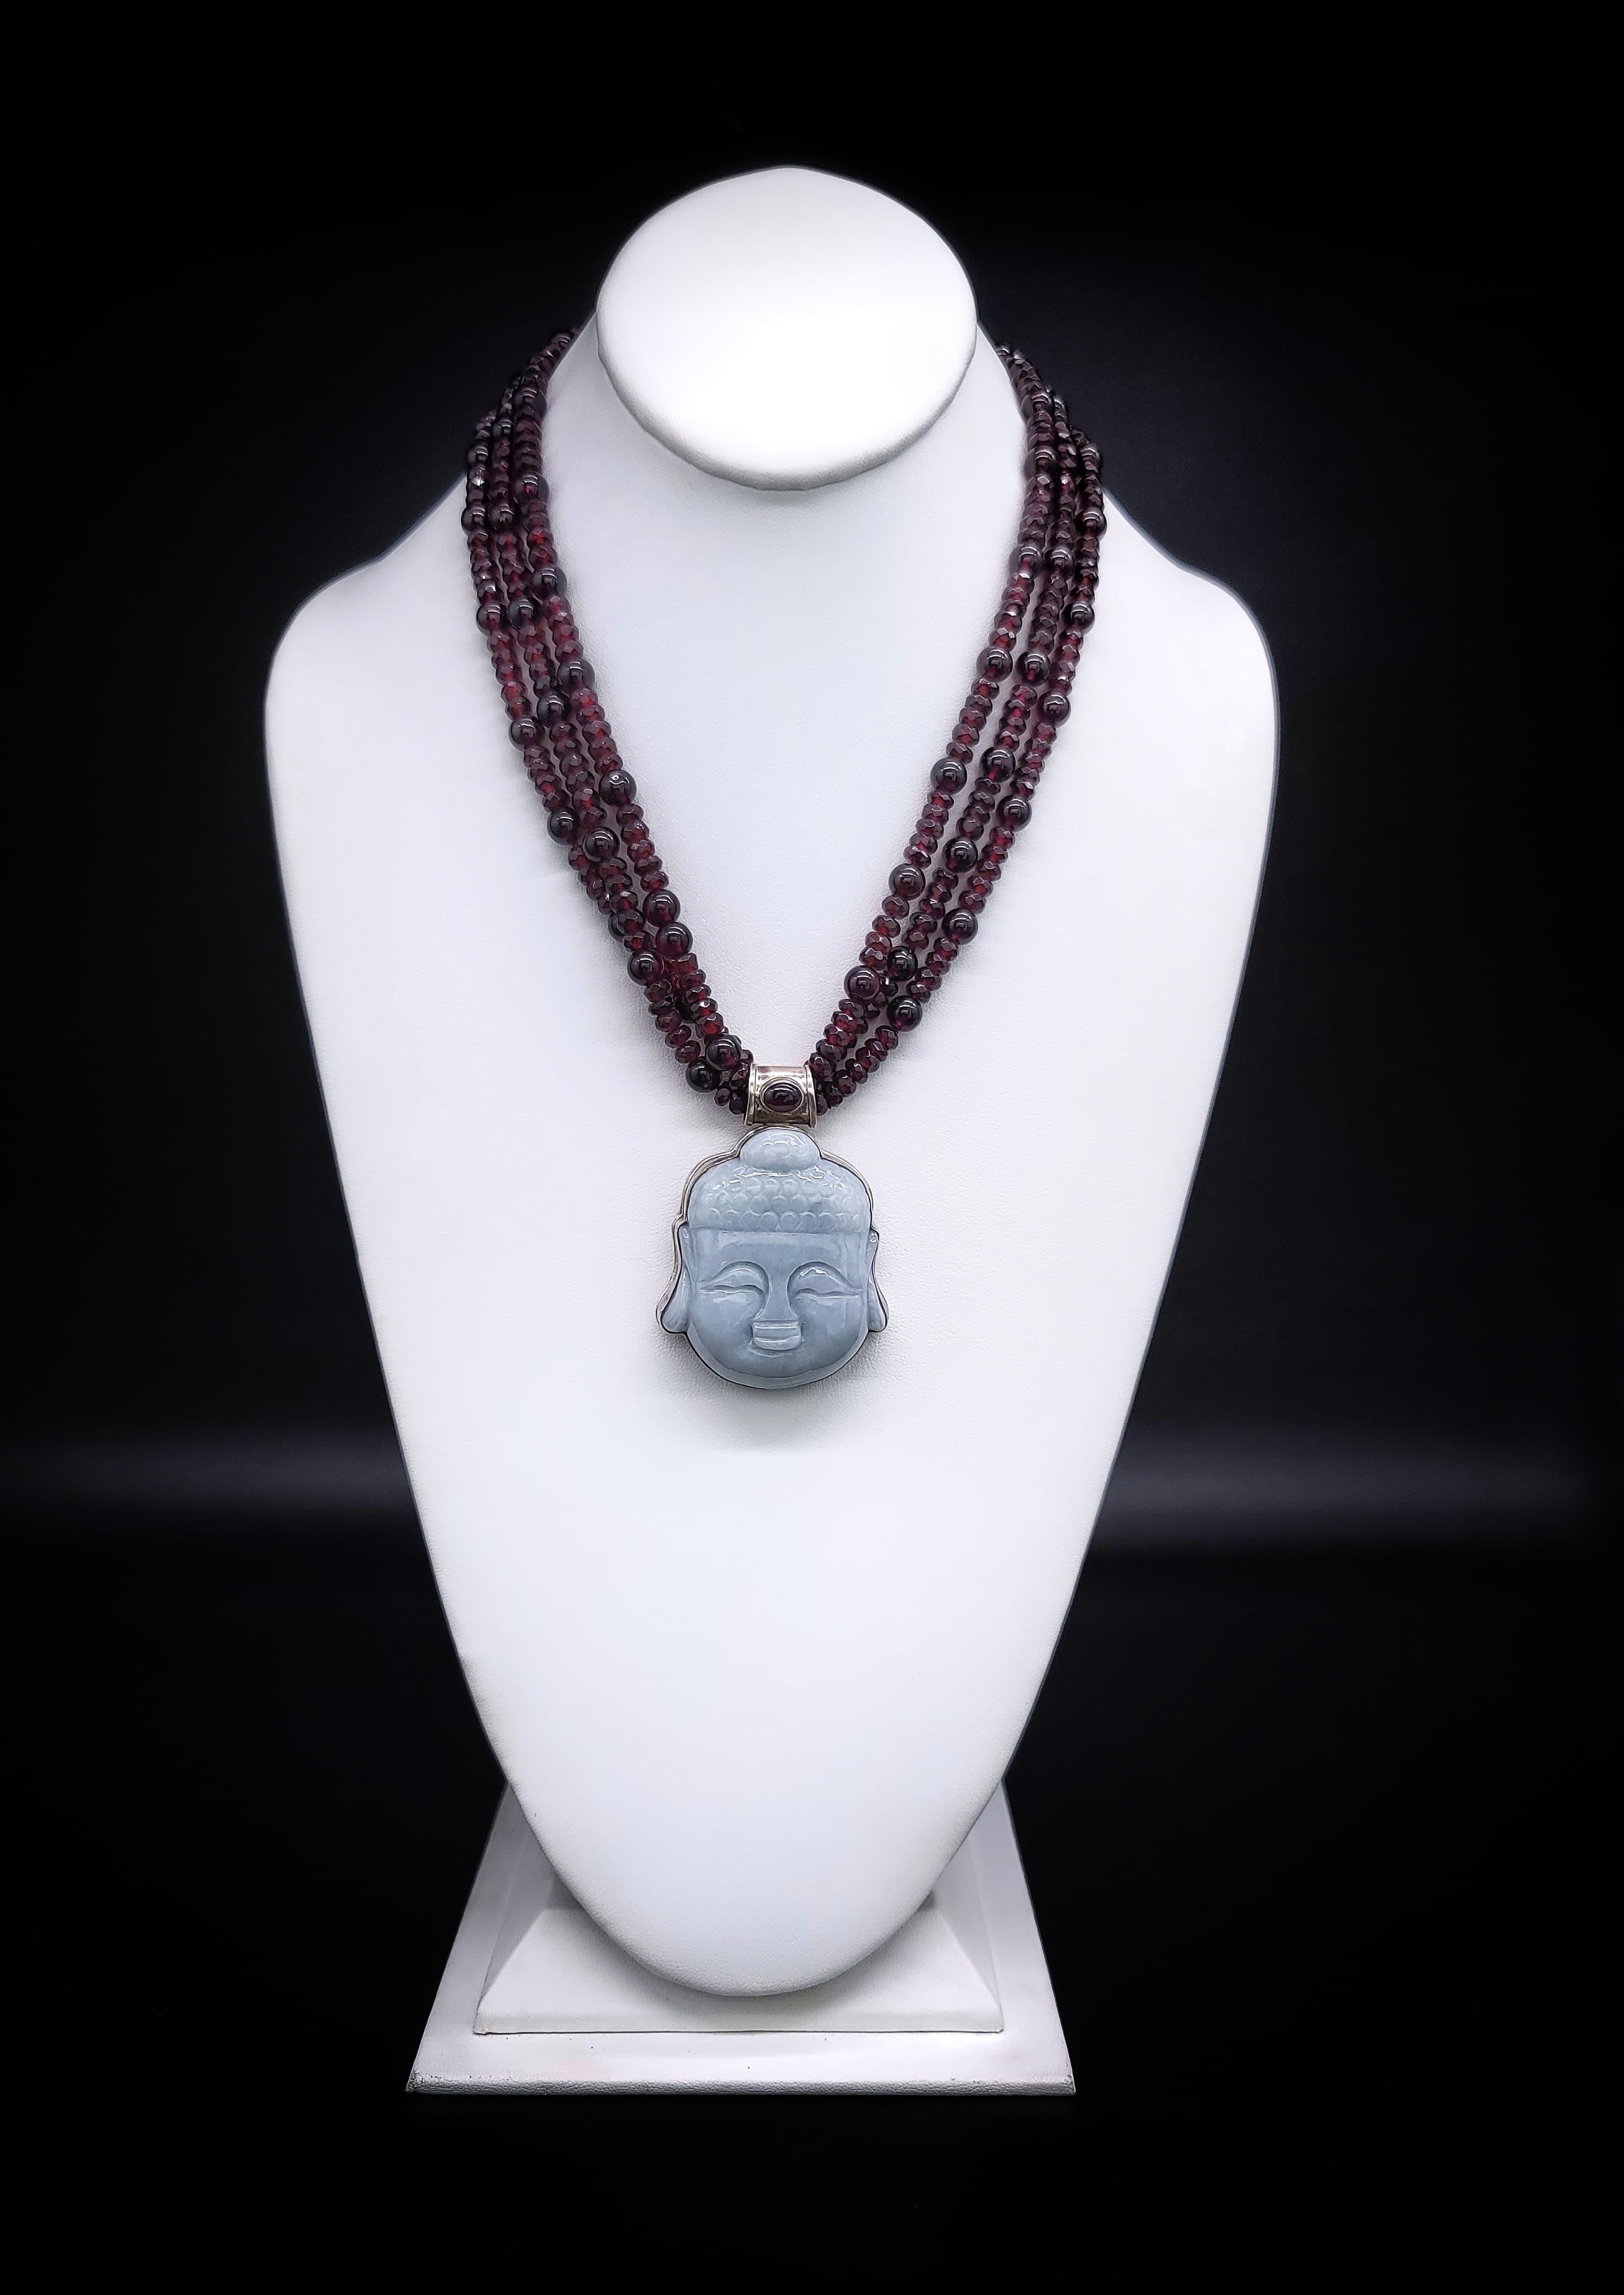 A.Jeschel  Garnet with a Jade carved Buddha pendant necklace. 11